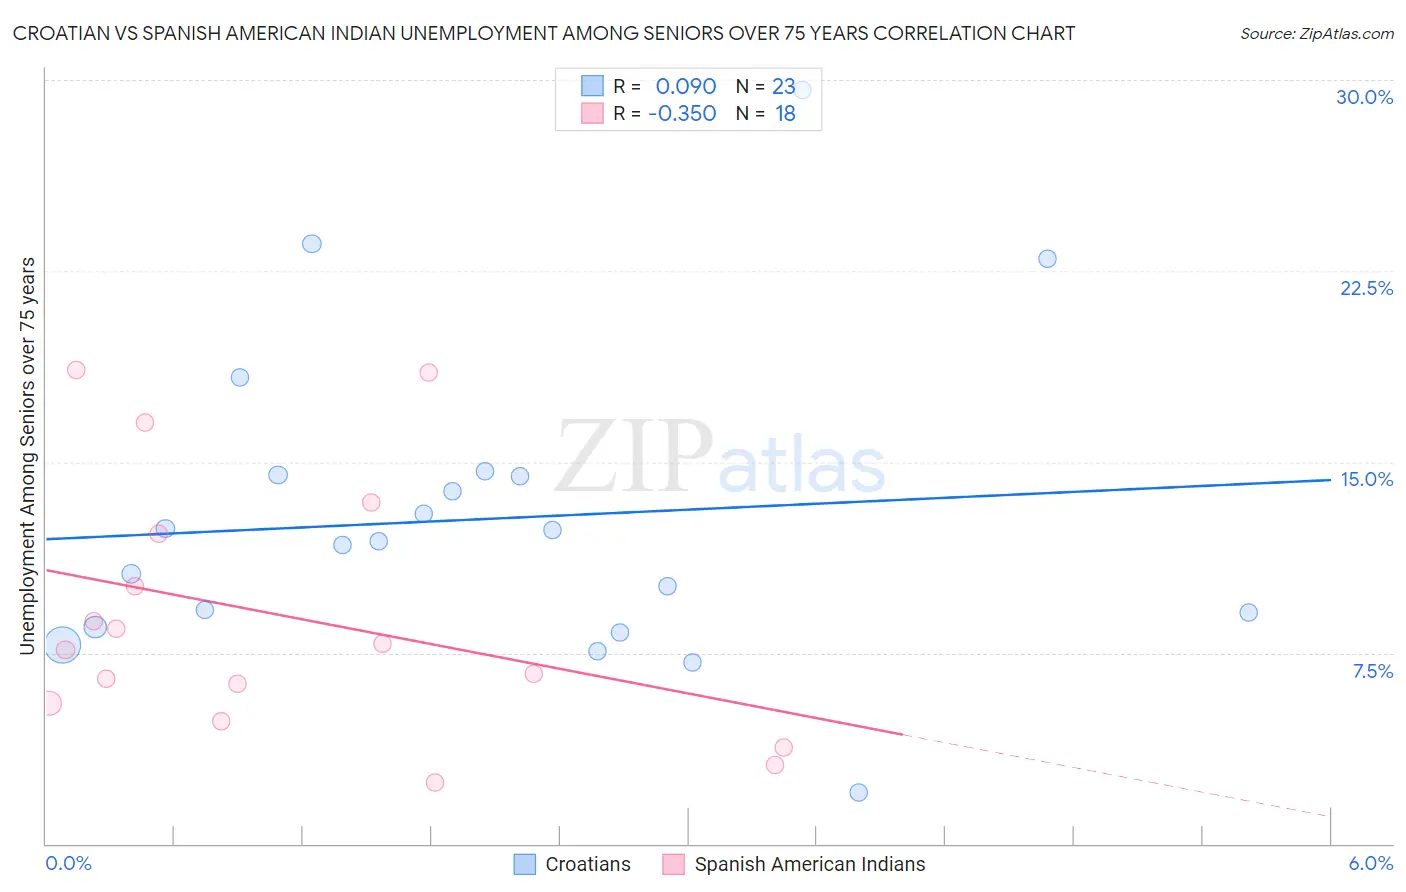 Croatian vs Spanish American Indian Unemployment Among Seniors over 75 years